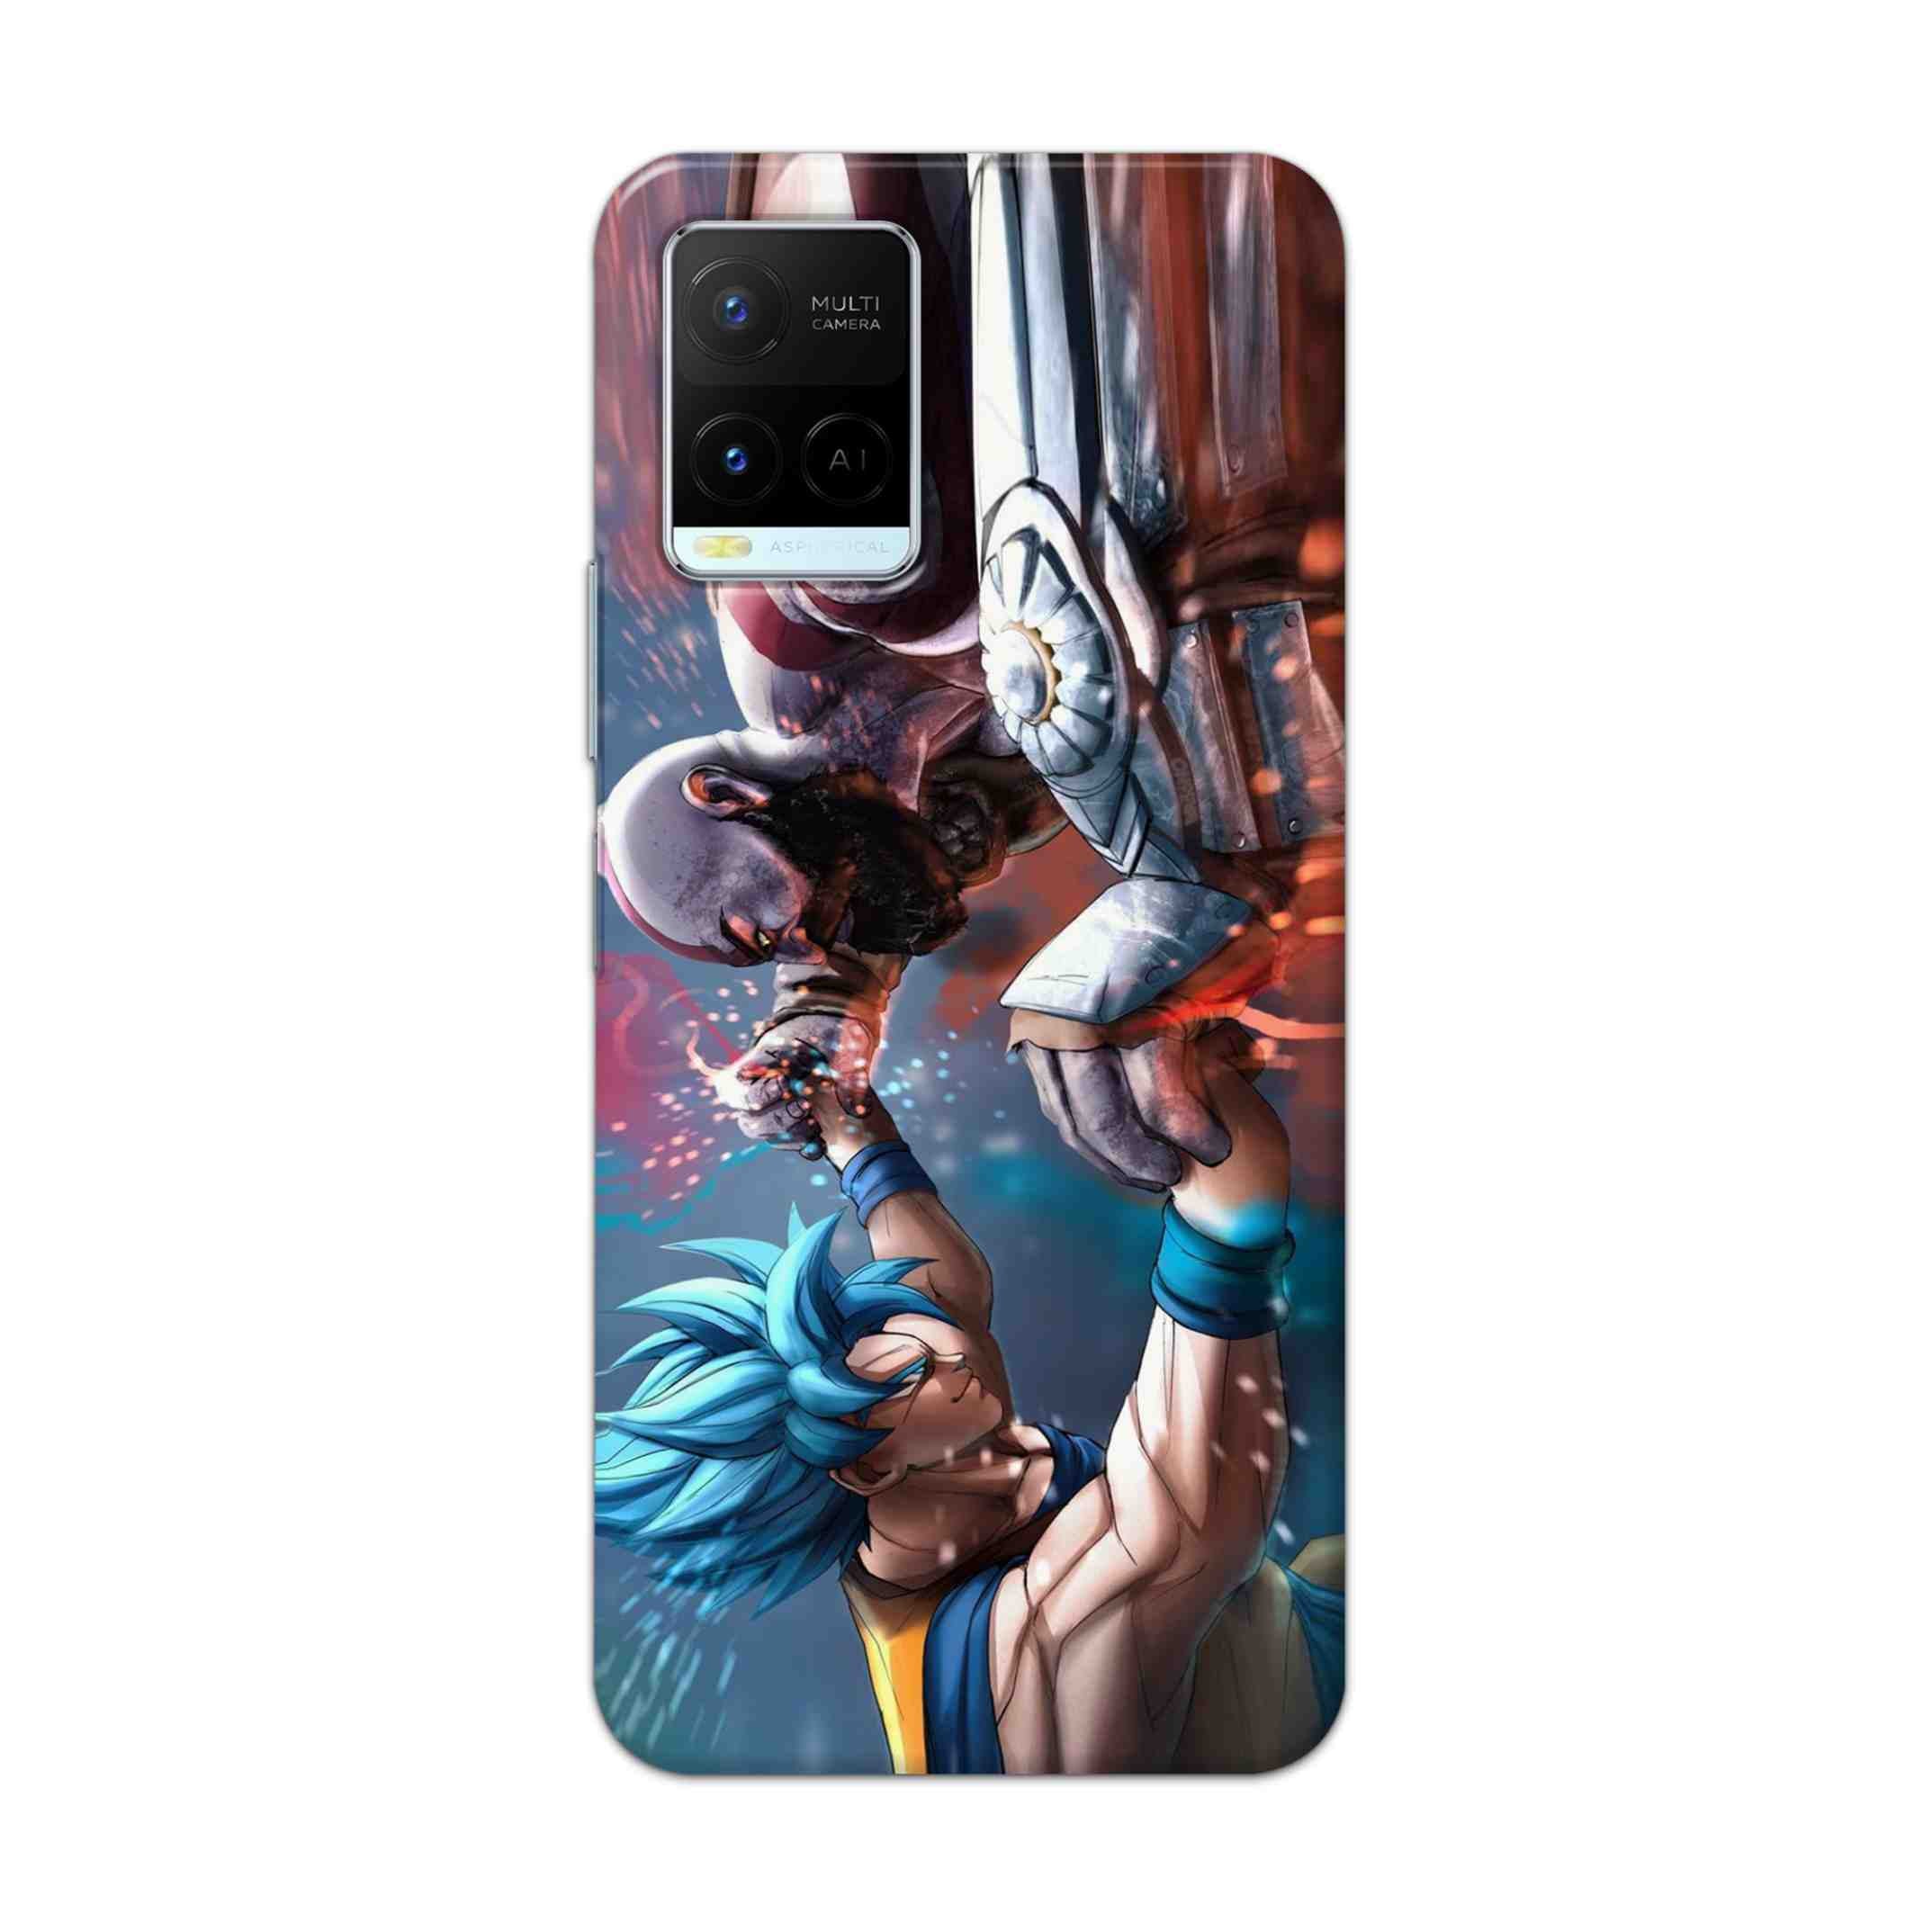 Buy Goku Vs Kratos Hard Back Mobile Phone Case Cover For Vivo Y21 2021 Online